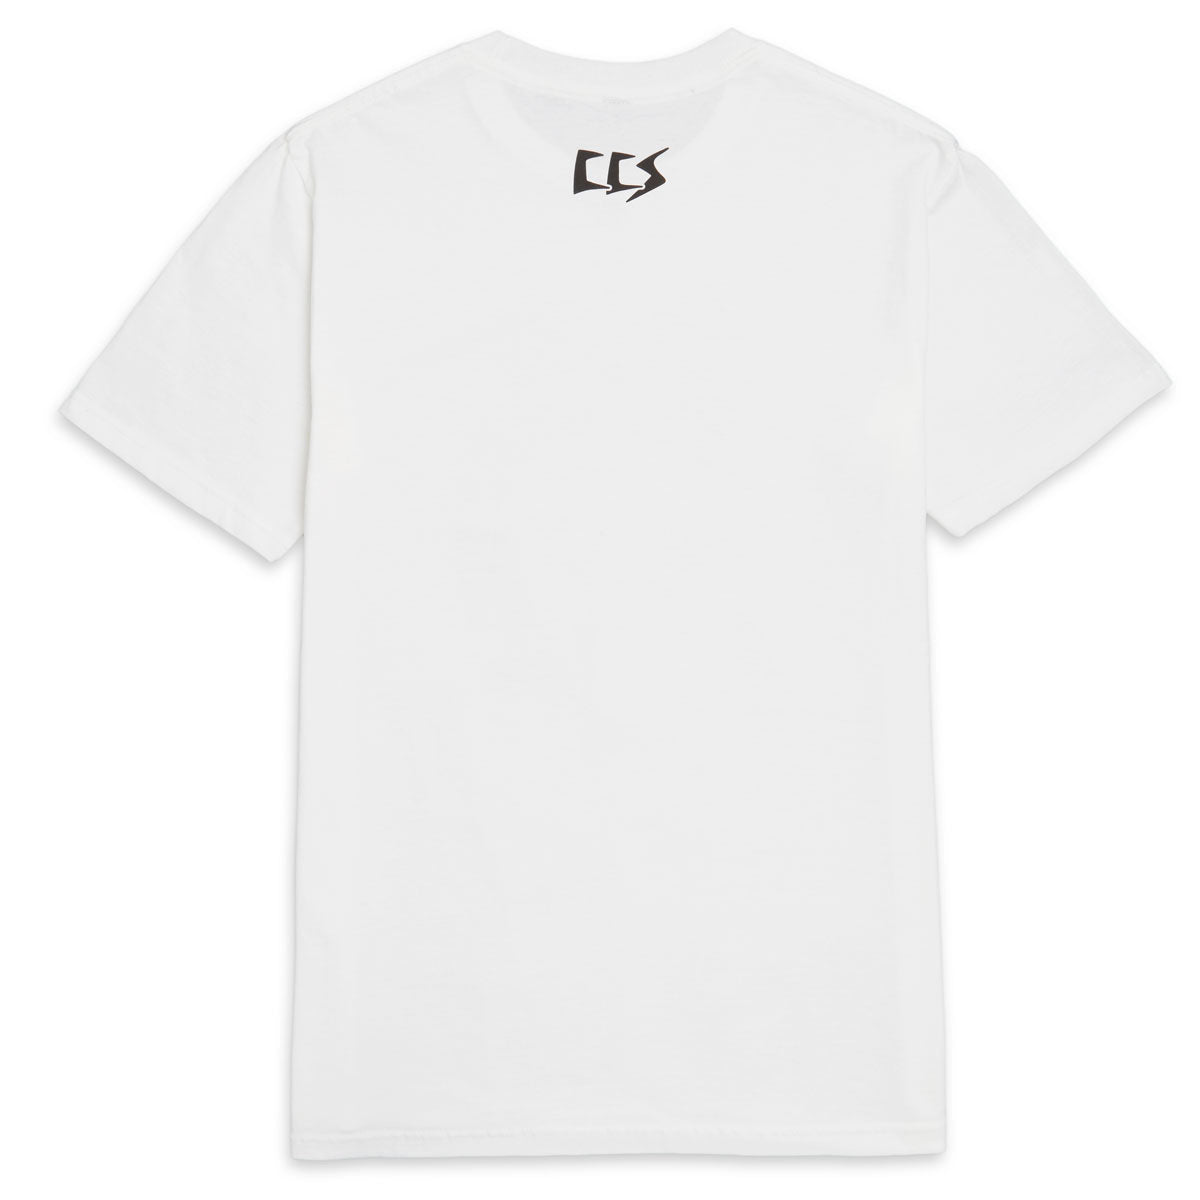 CCS OG Punk T-Shirt - White/Red image 2